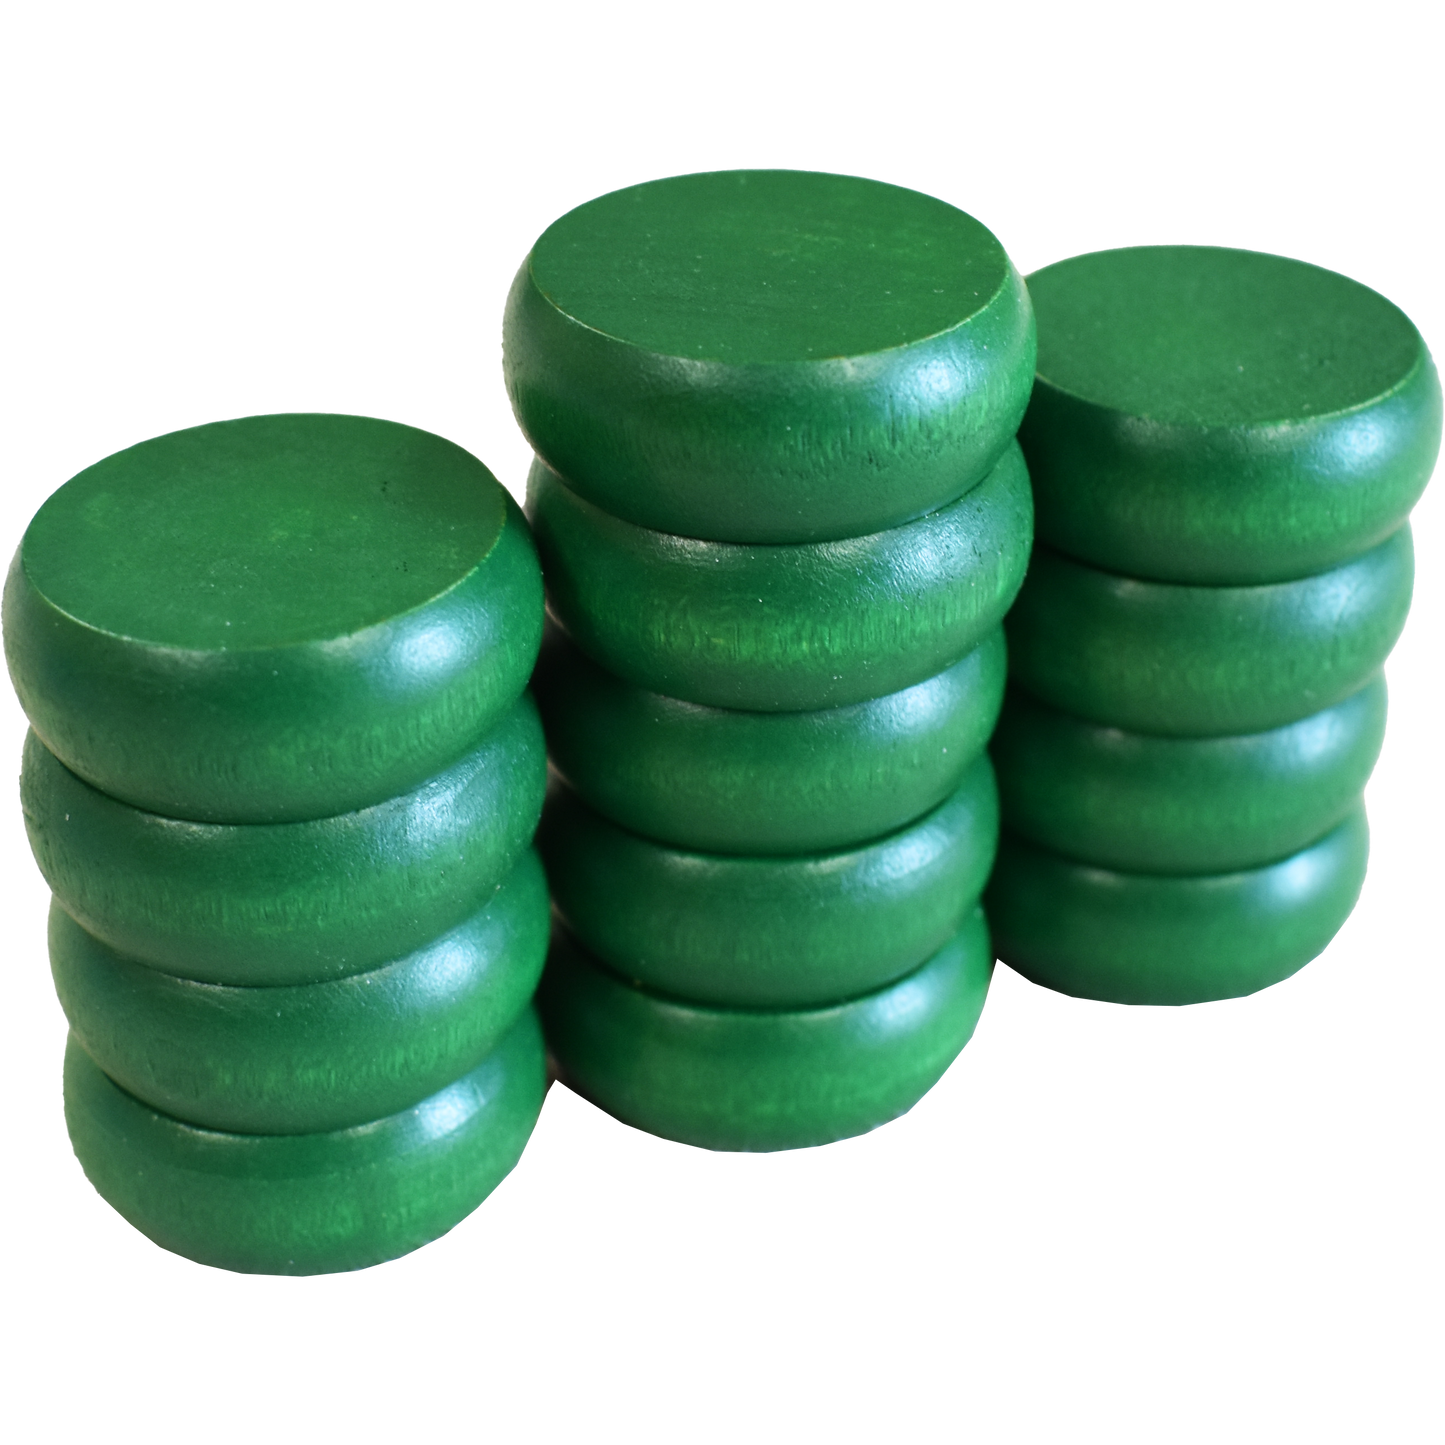 13 Mini Green Crokinole Discs - Half Set (Shiny Finish)